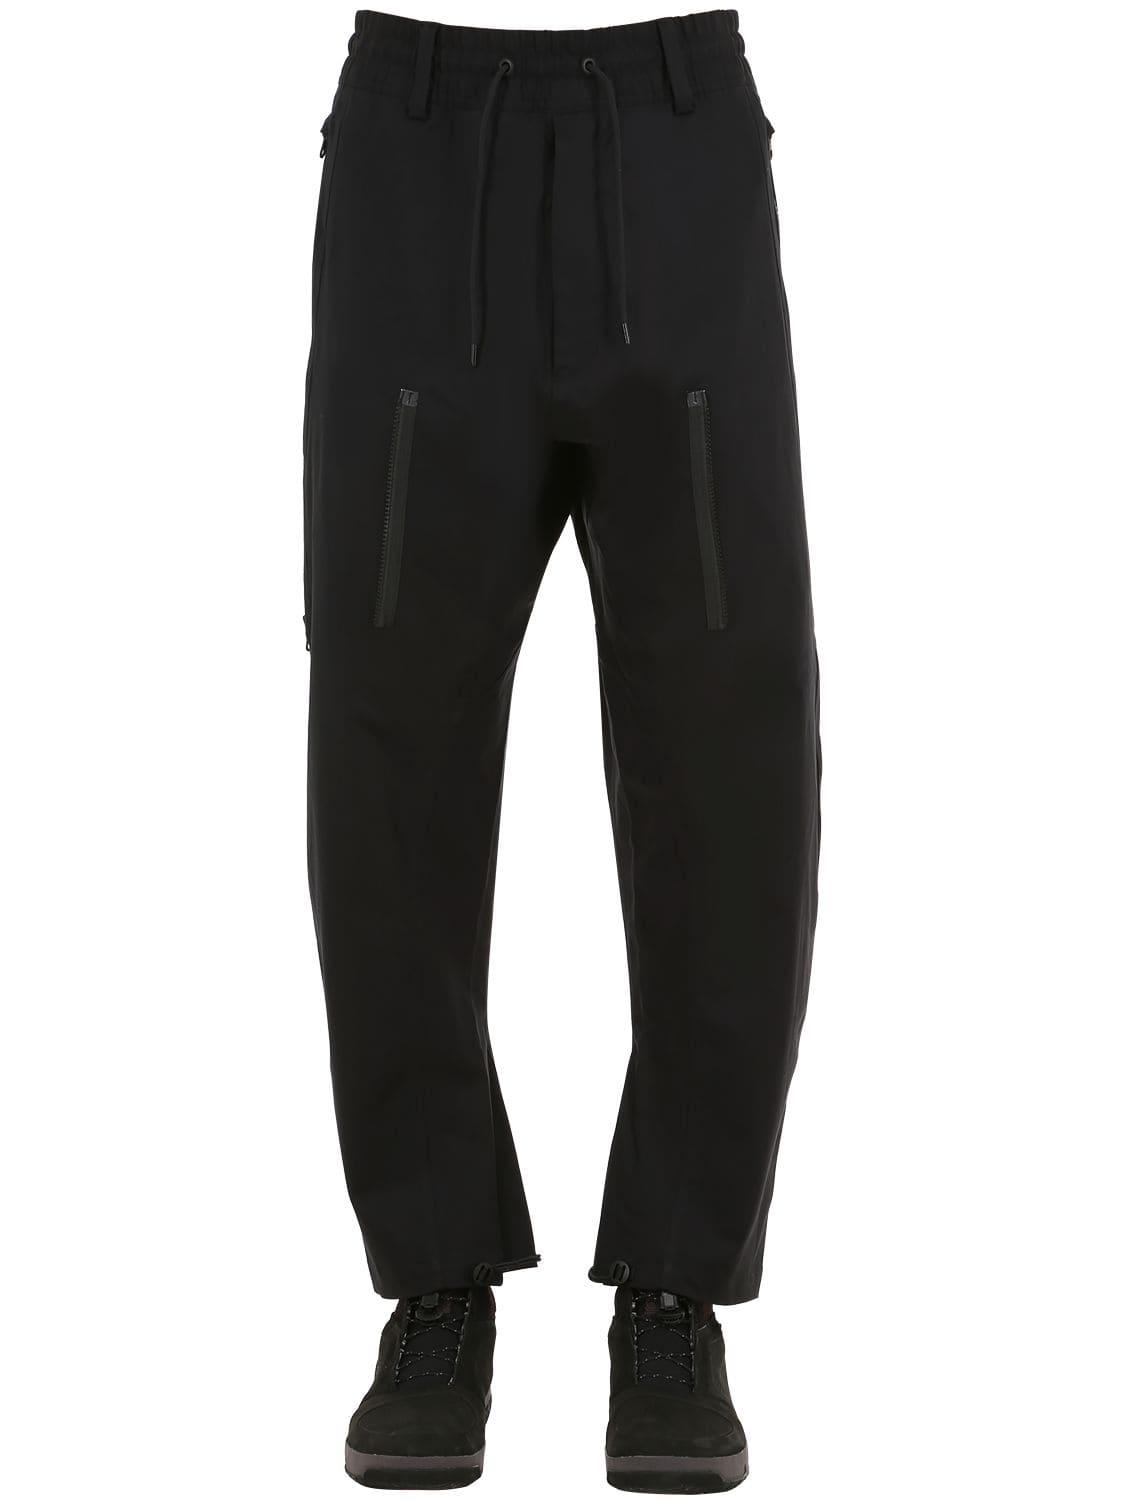 Nike Nikelab Acg Cargo Pants in Black for Men - Lyst